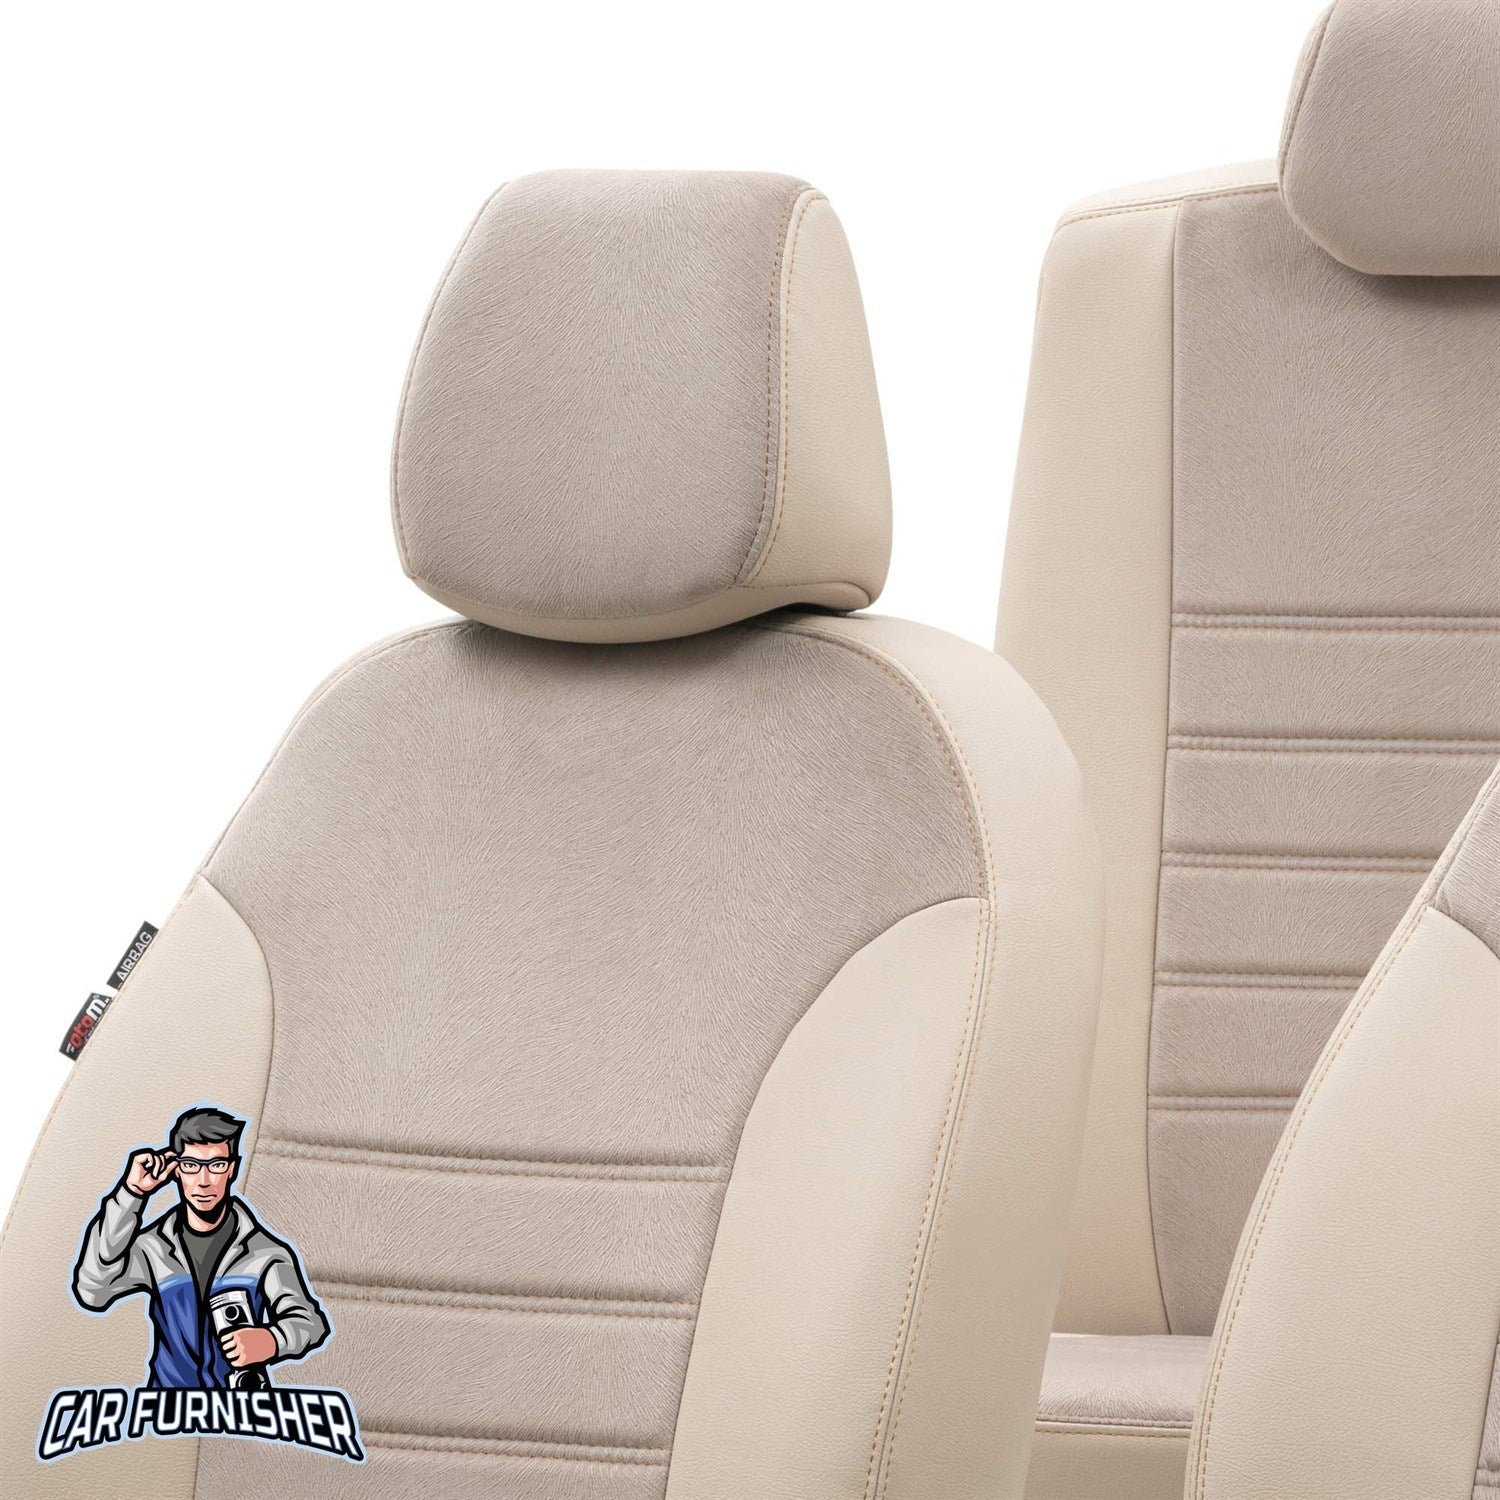 Skoda Octavia Car Seat Covers 1999-2023 London Design Beige Full Set (5 Seats + Handrest) Leather & Fabric